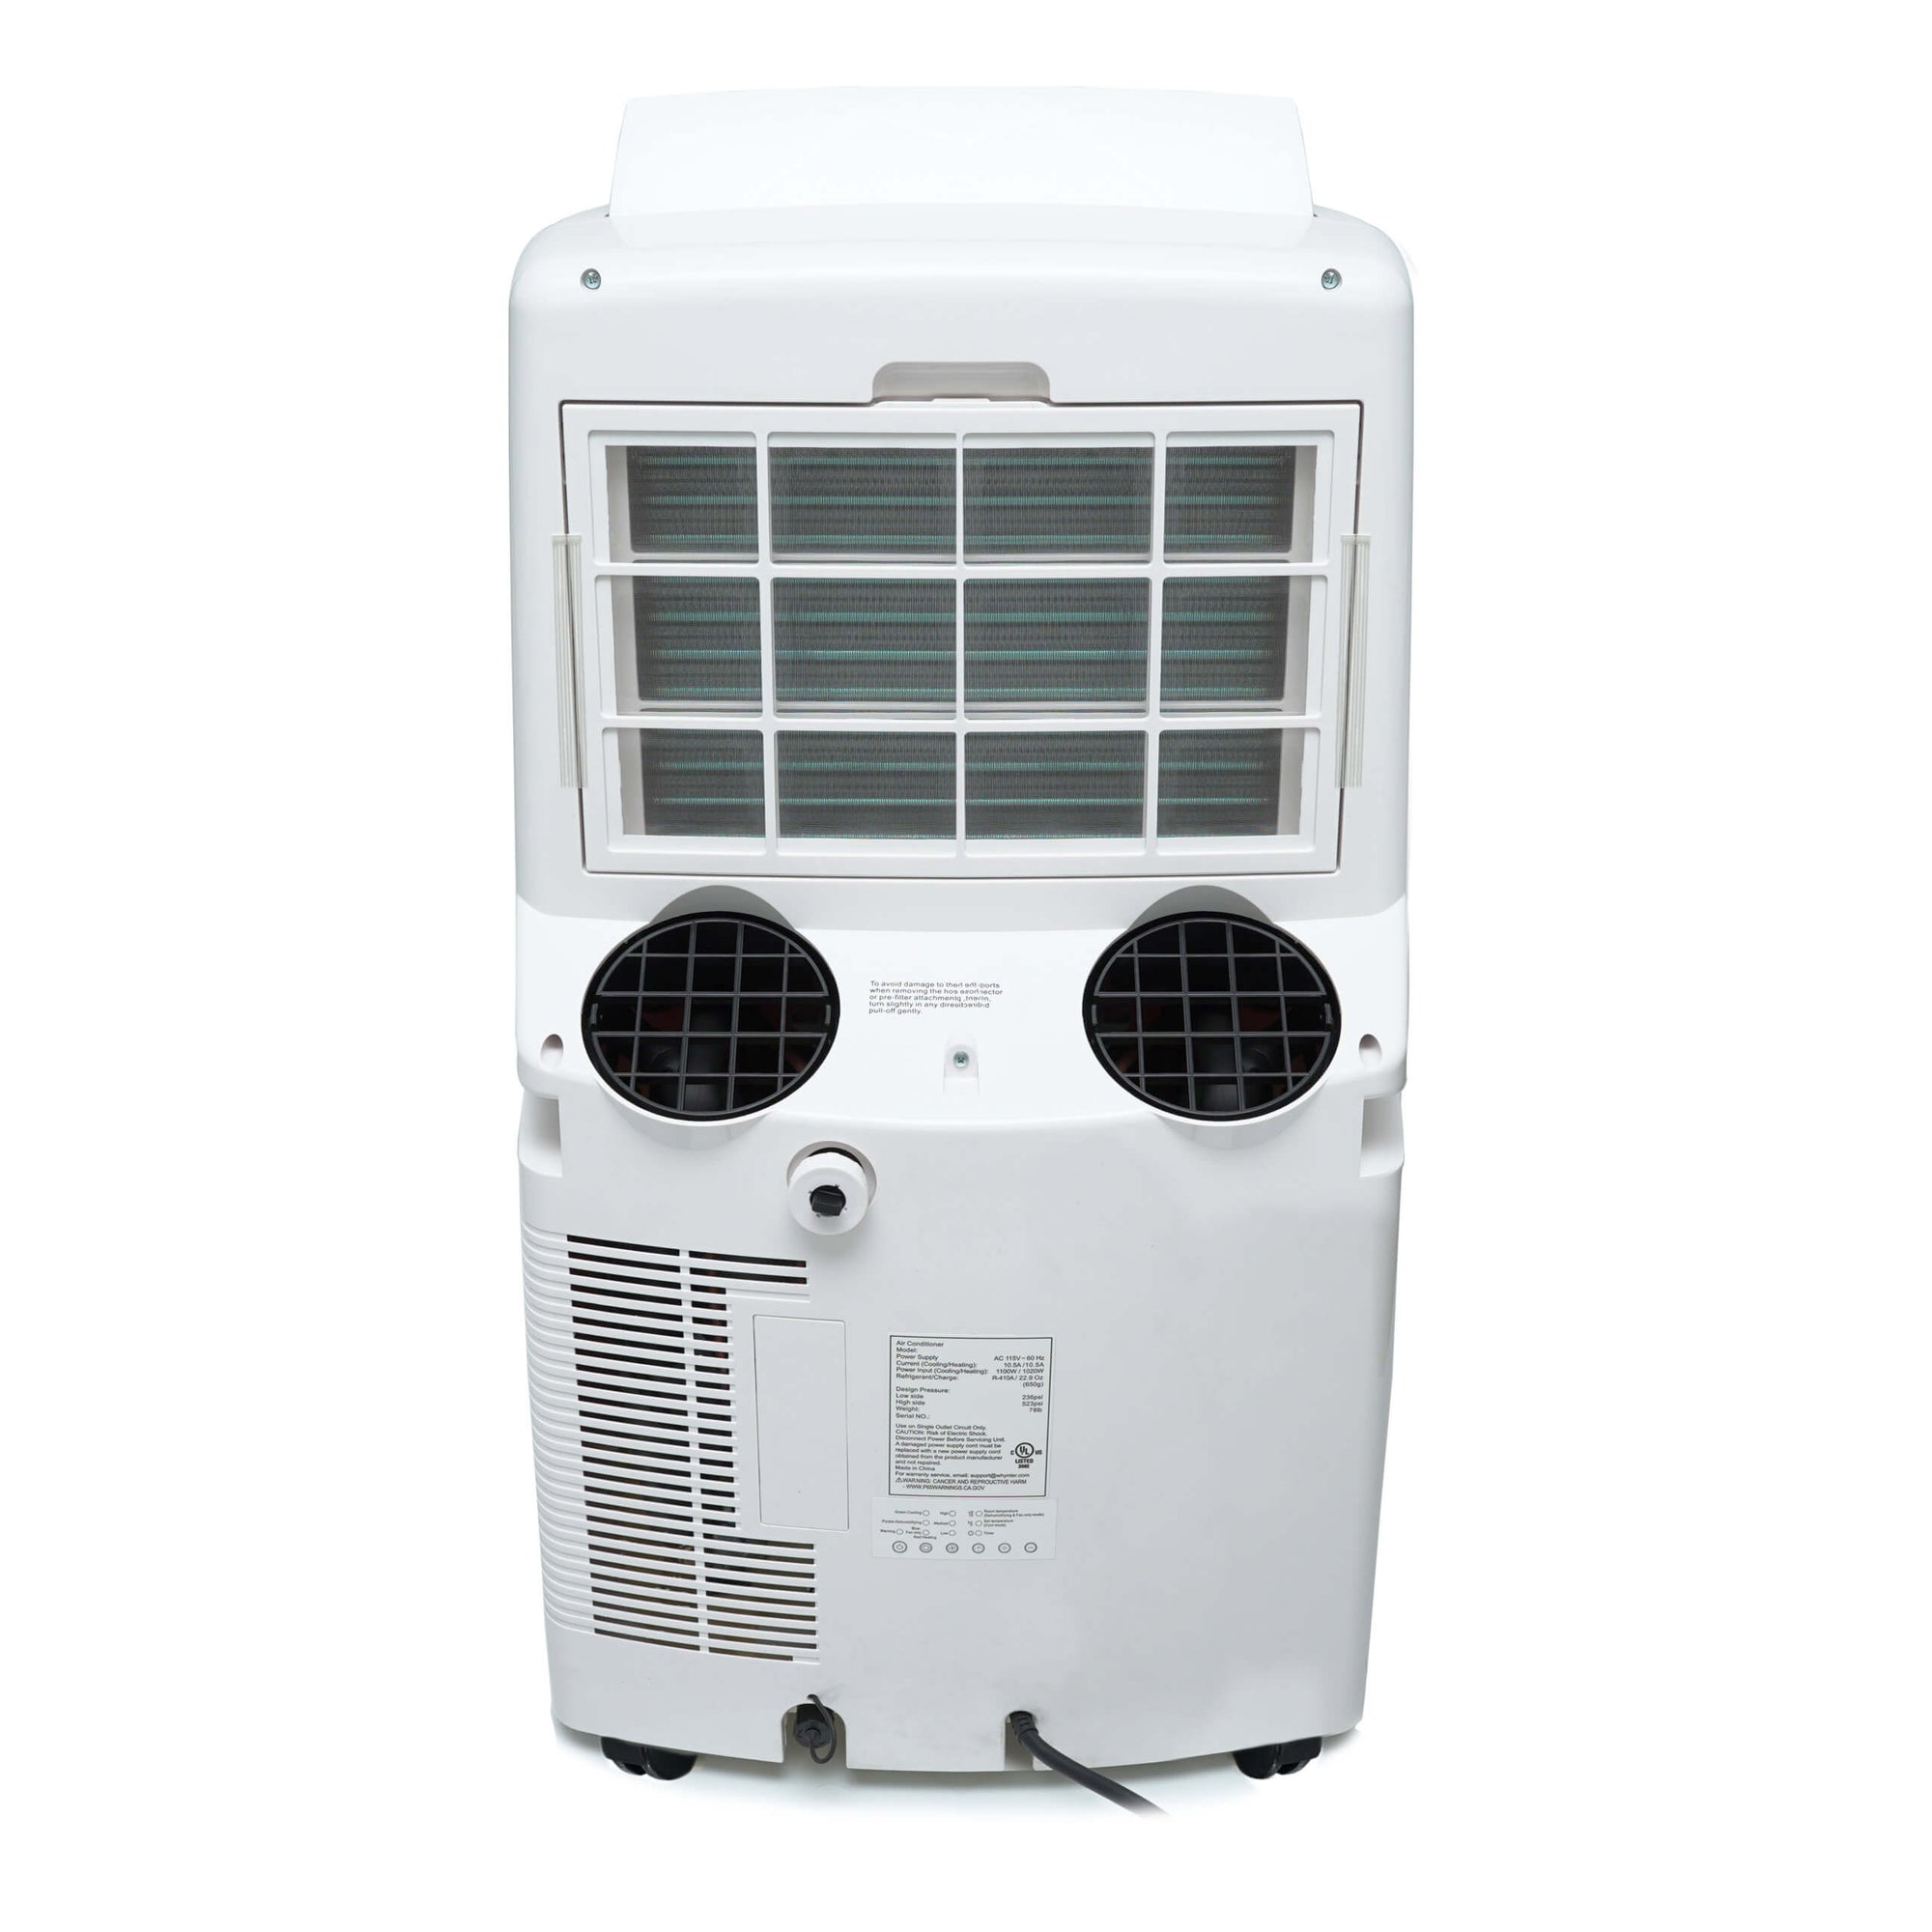 Whynter ARC-12SDH 12,000 BTU Portable Air Conditioner Heat with Dehumidifier New